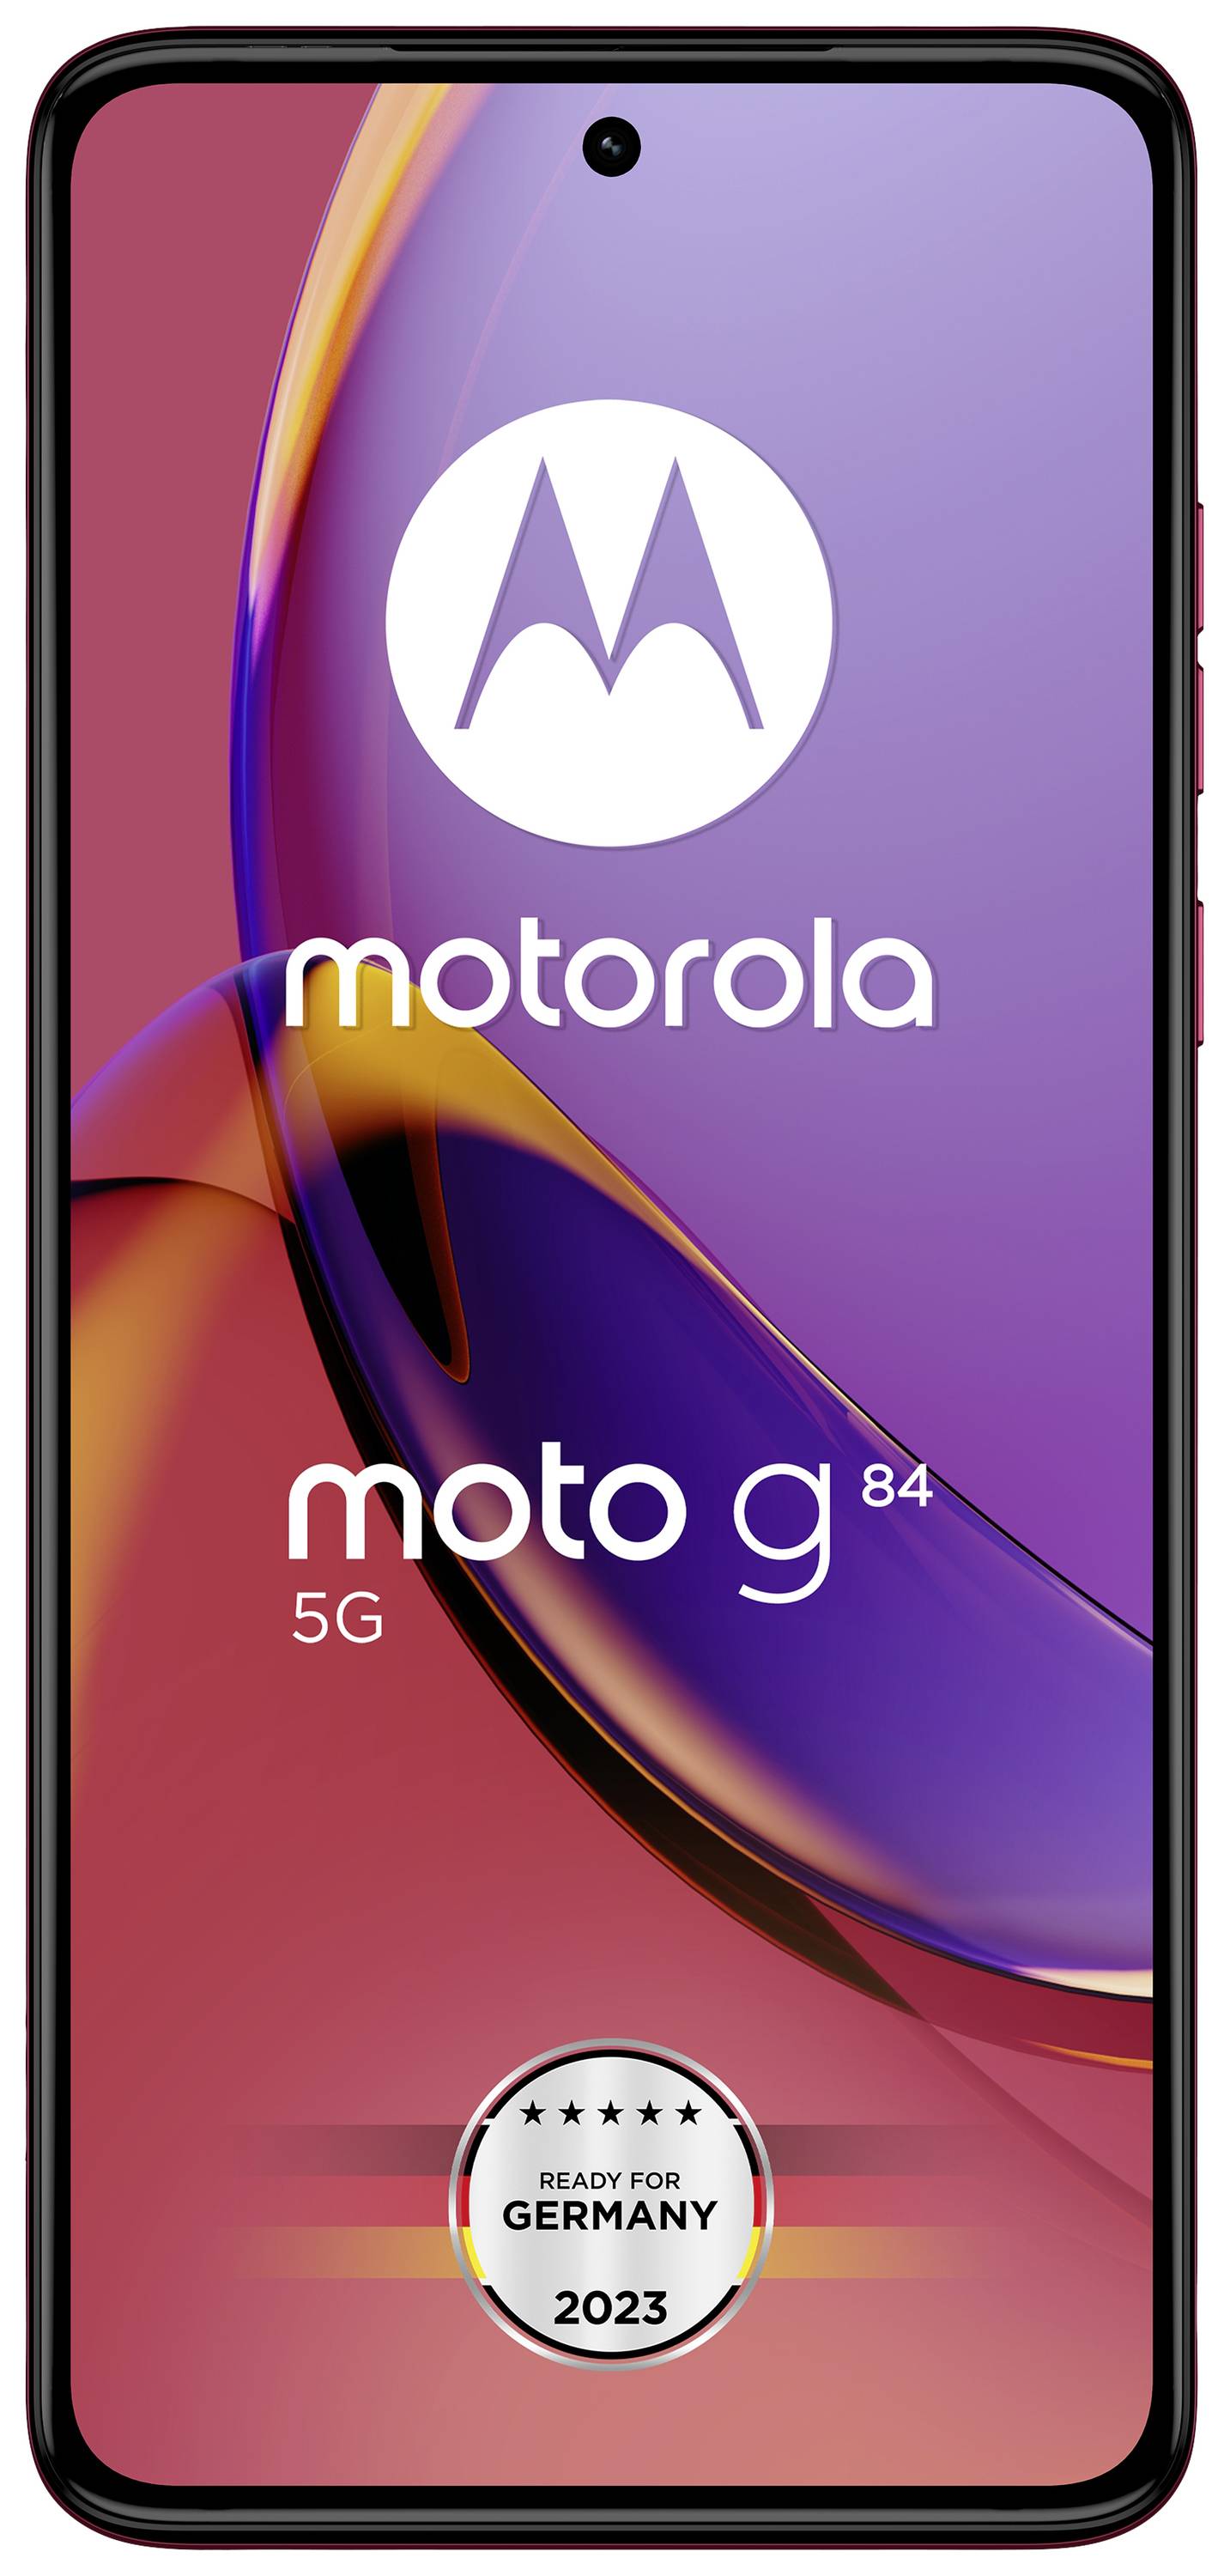 (6.55 256 Dual-SIM g84 5G Android™ Zoll) motorola Magenta Smartphone GB cm 5G moto kaufen 16.6 13 Motorola